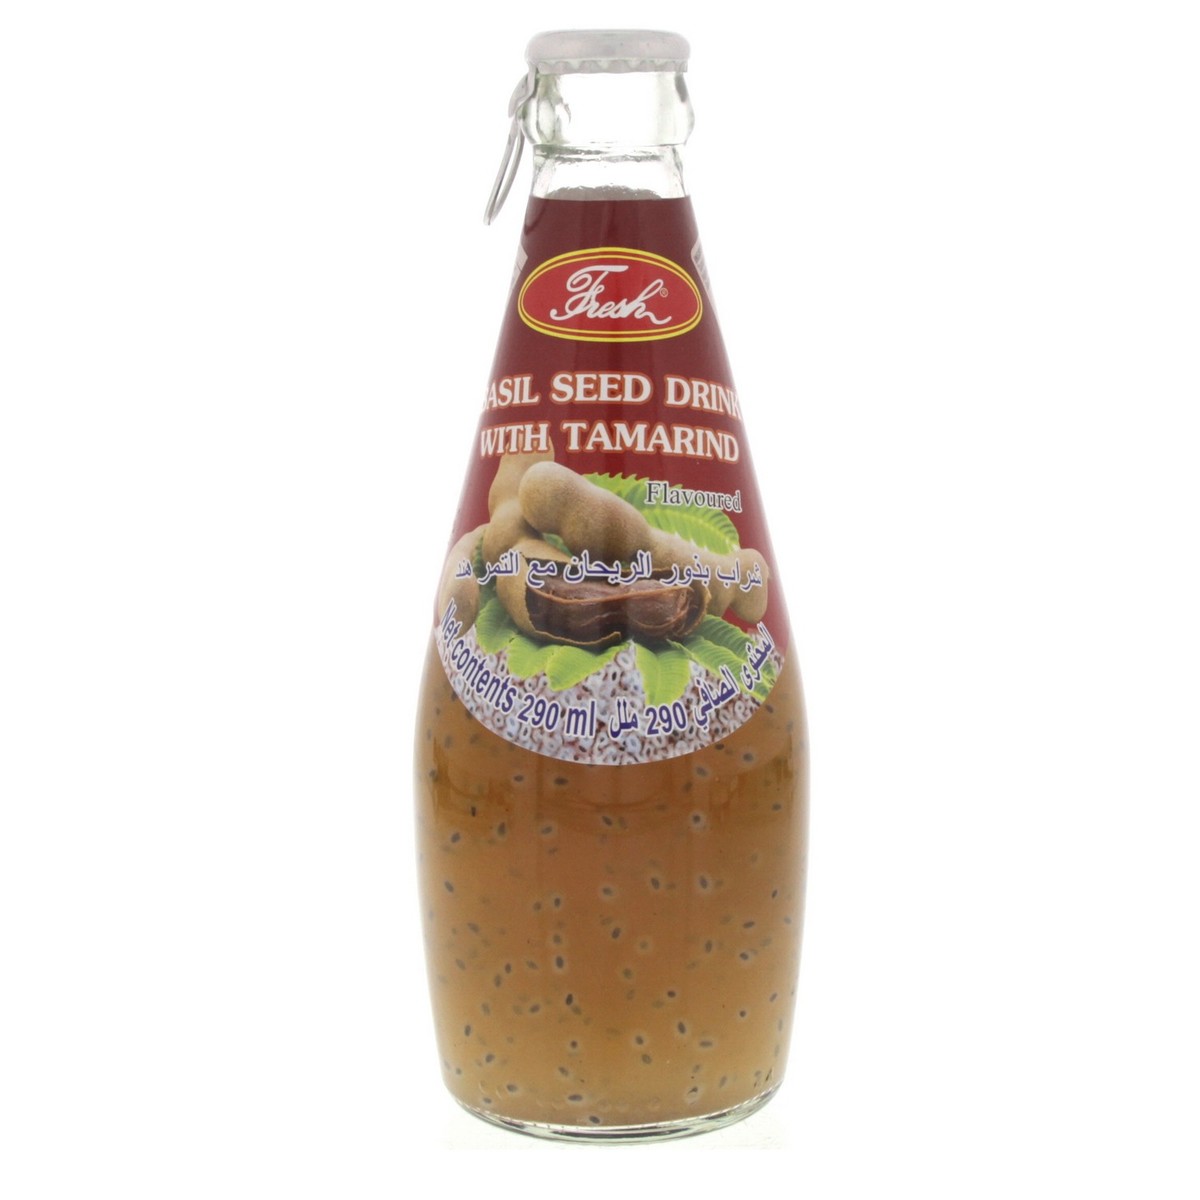 Fresh Basil Seed Drink With Tamarind 290ml